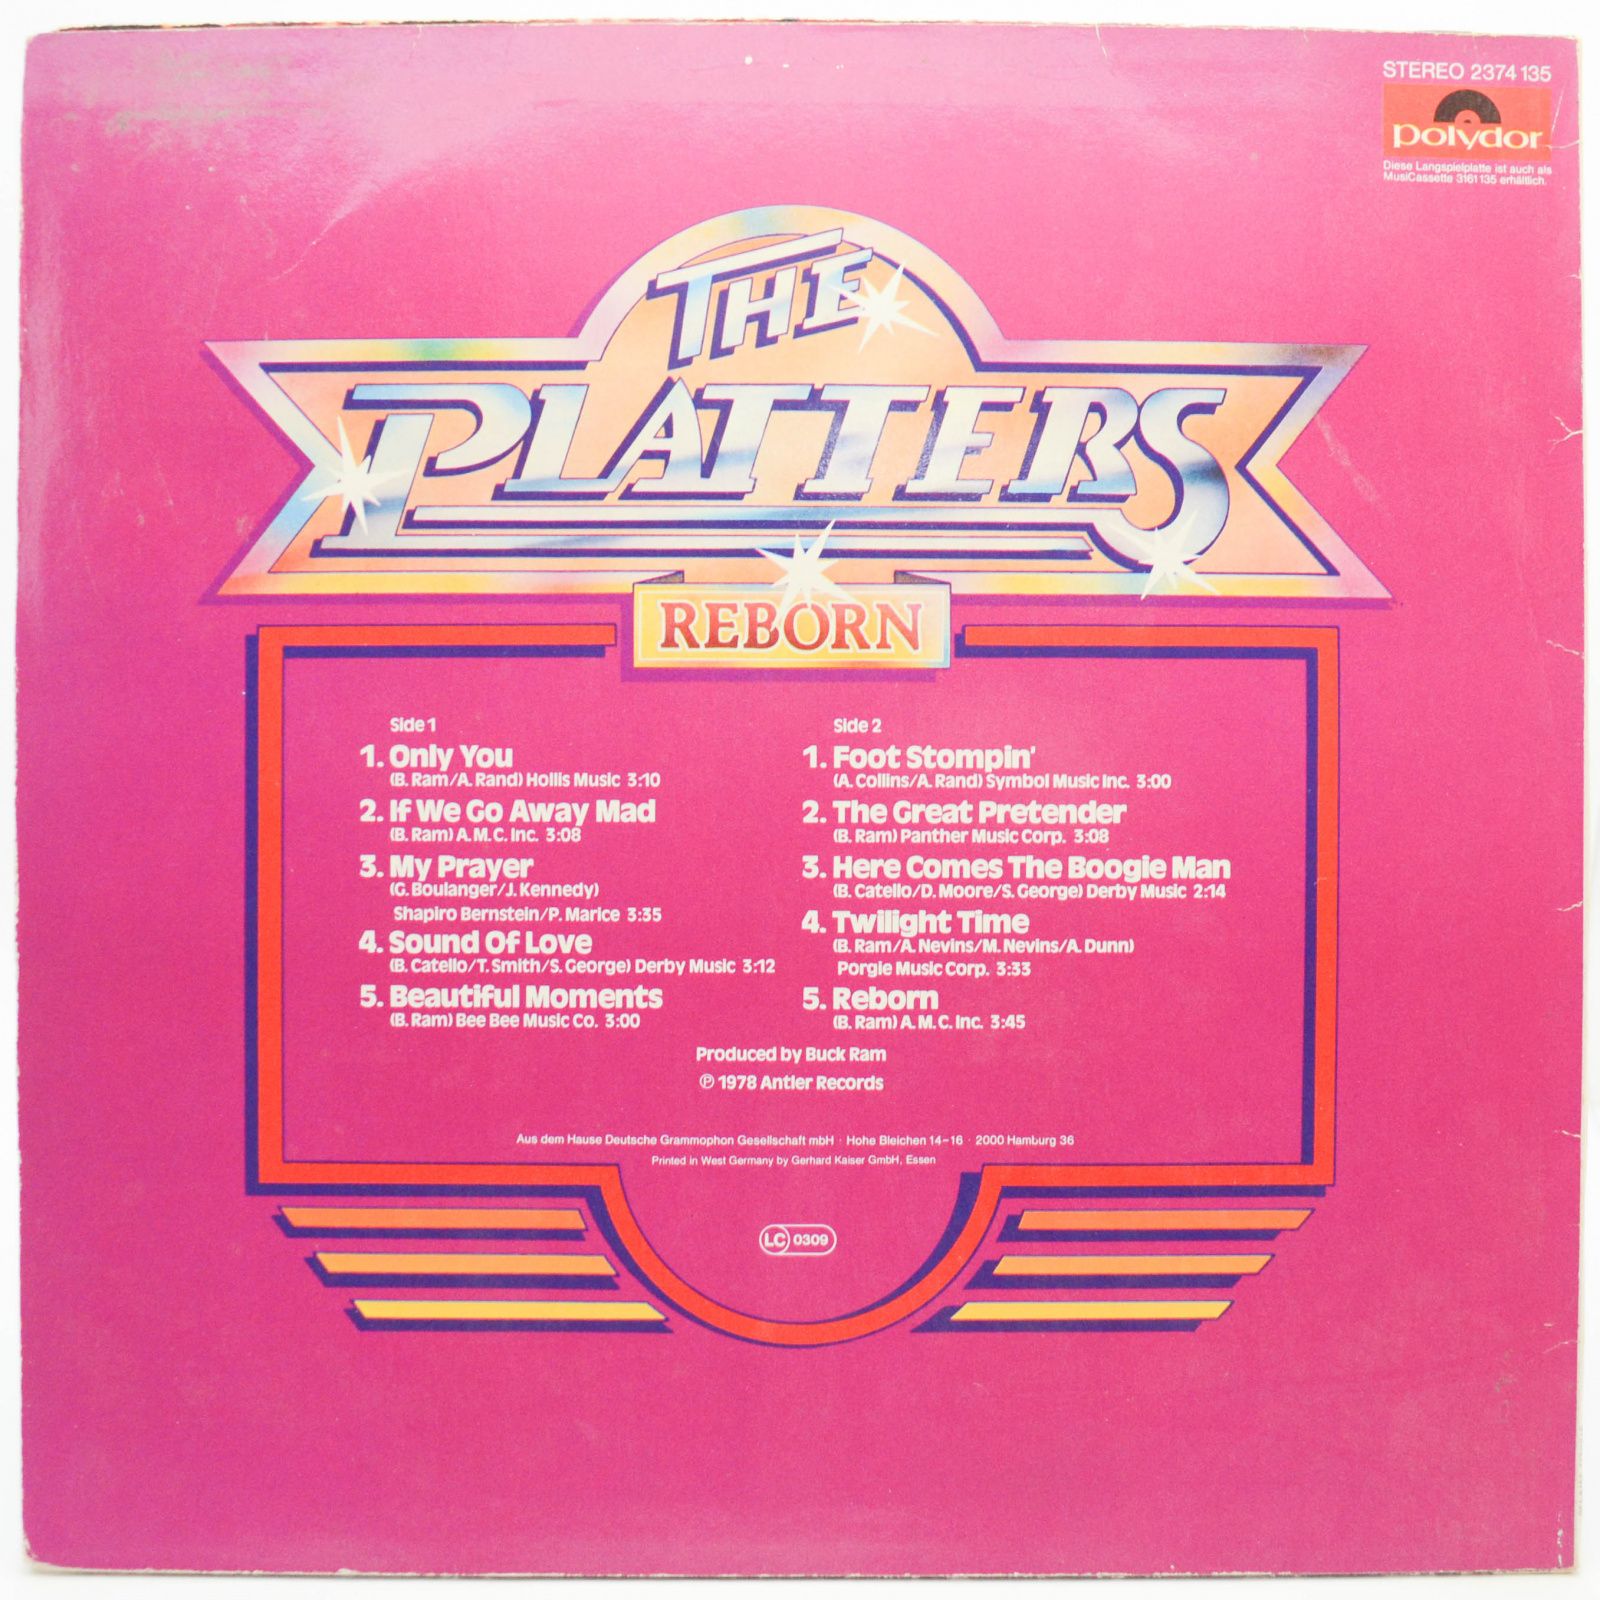 Platters — Reborn, 1978